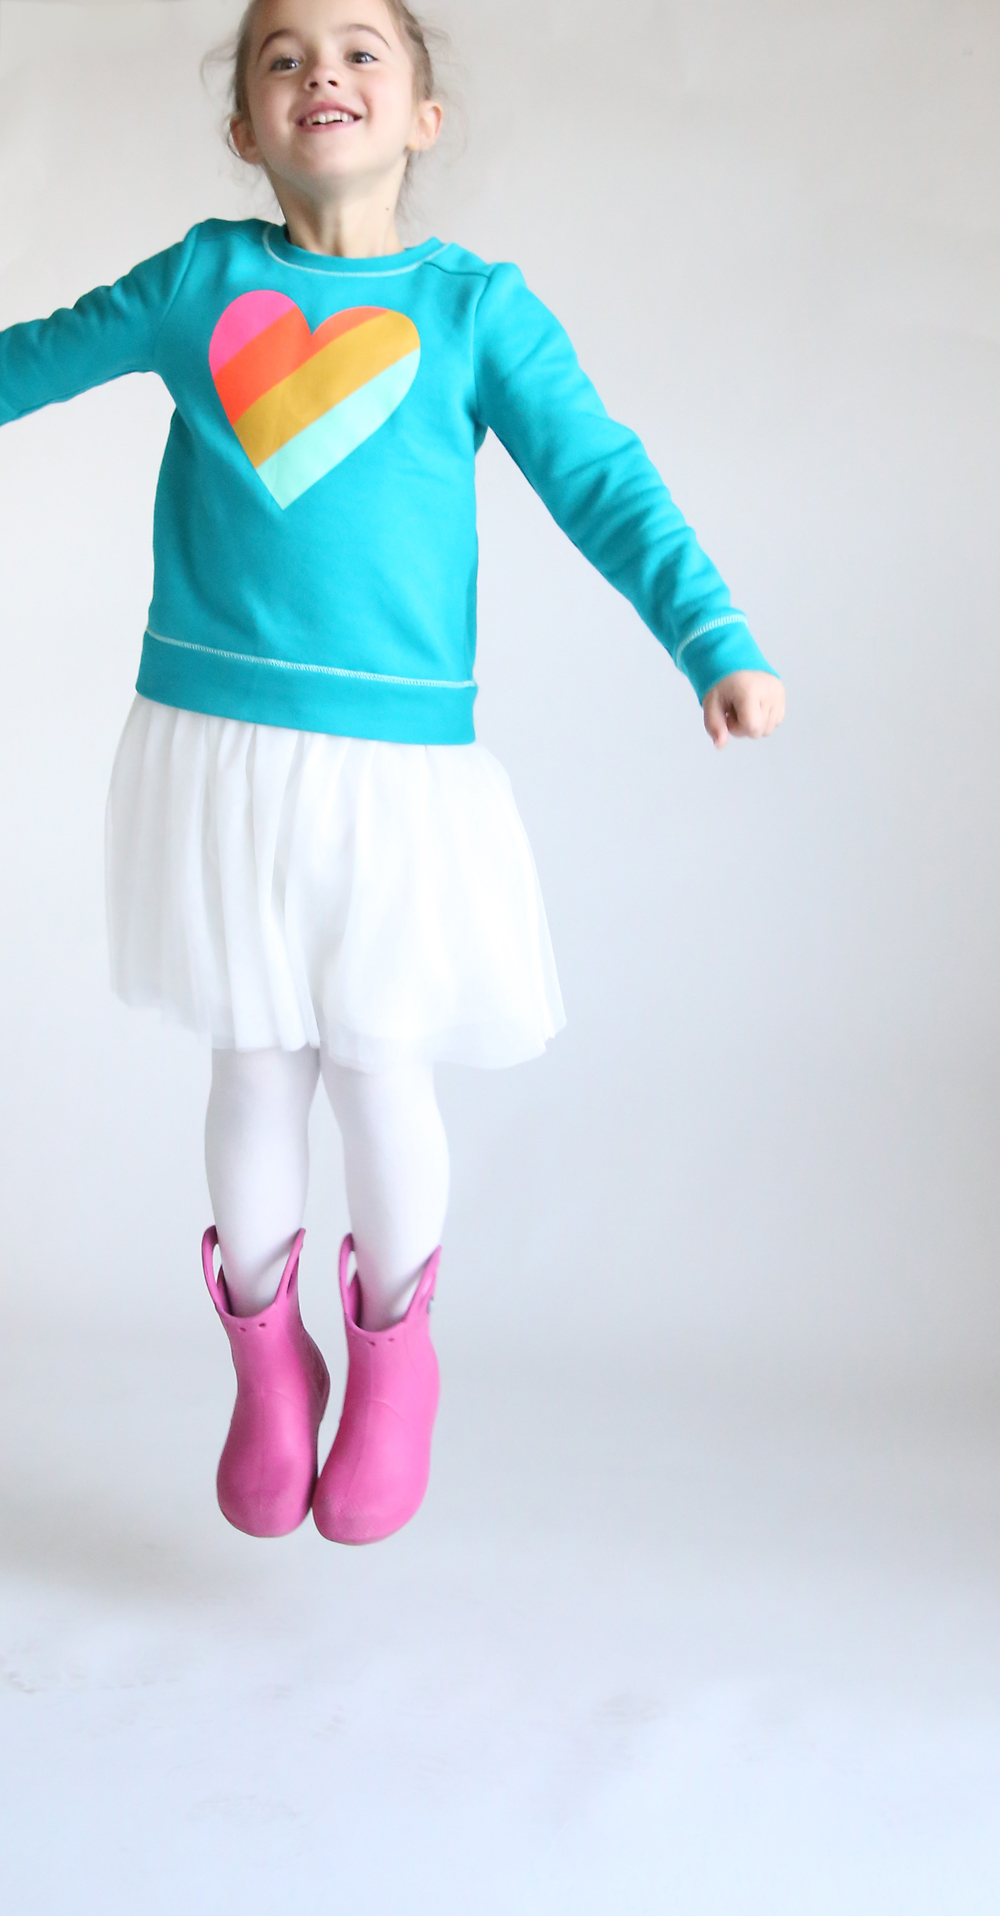 A little girl wearing a sweatshirt dress and jumping